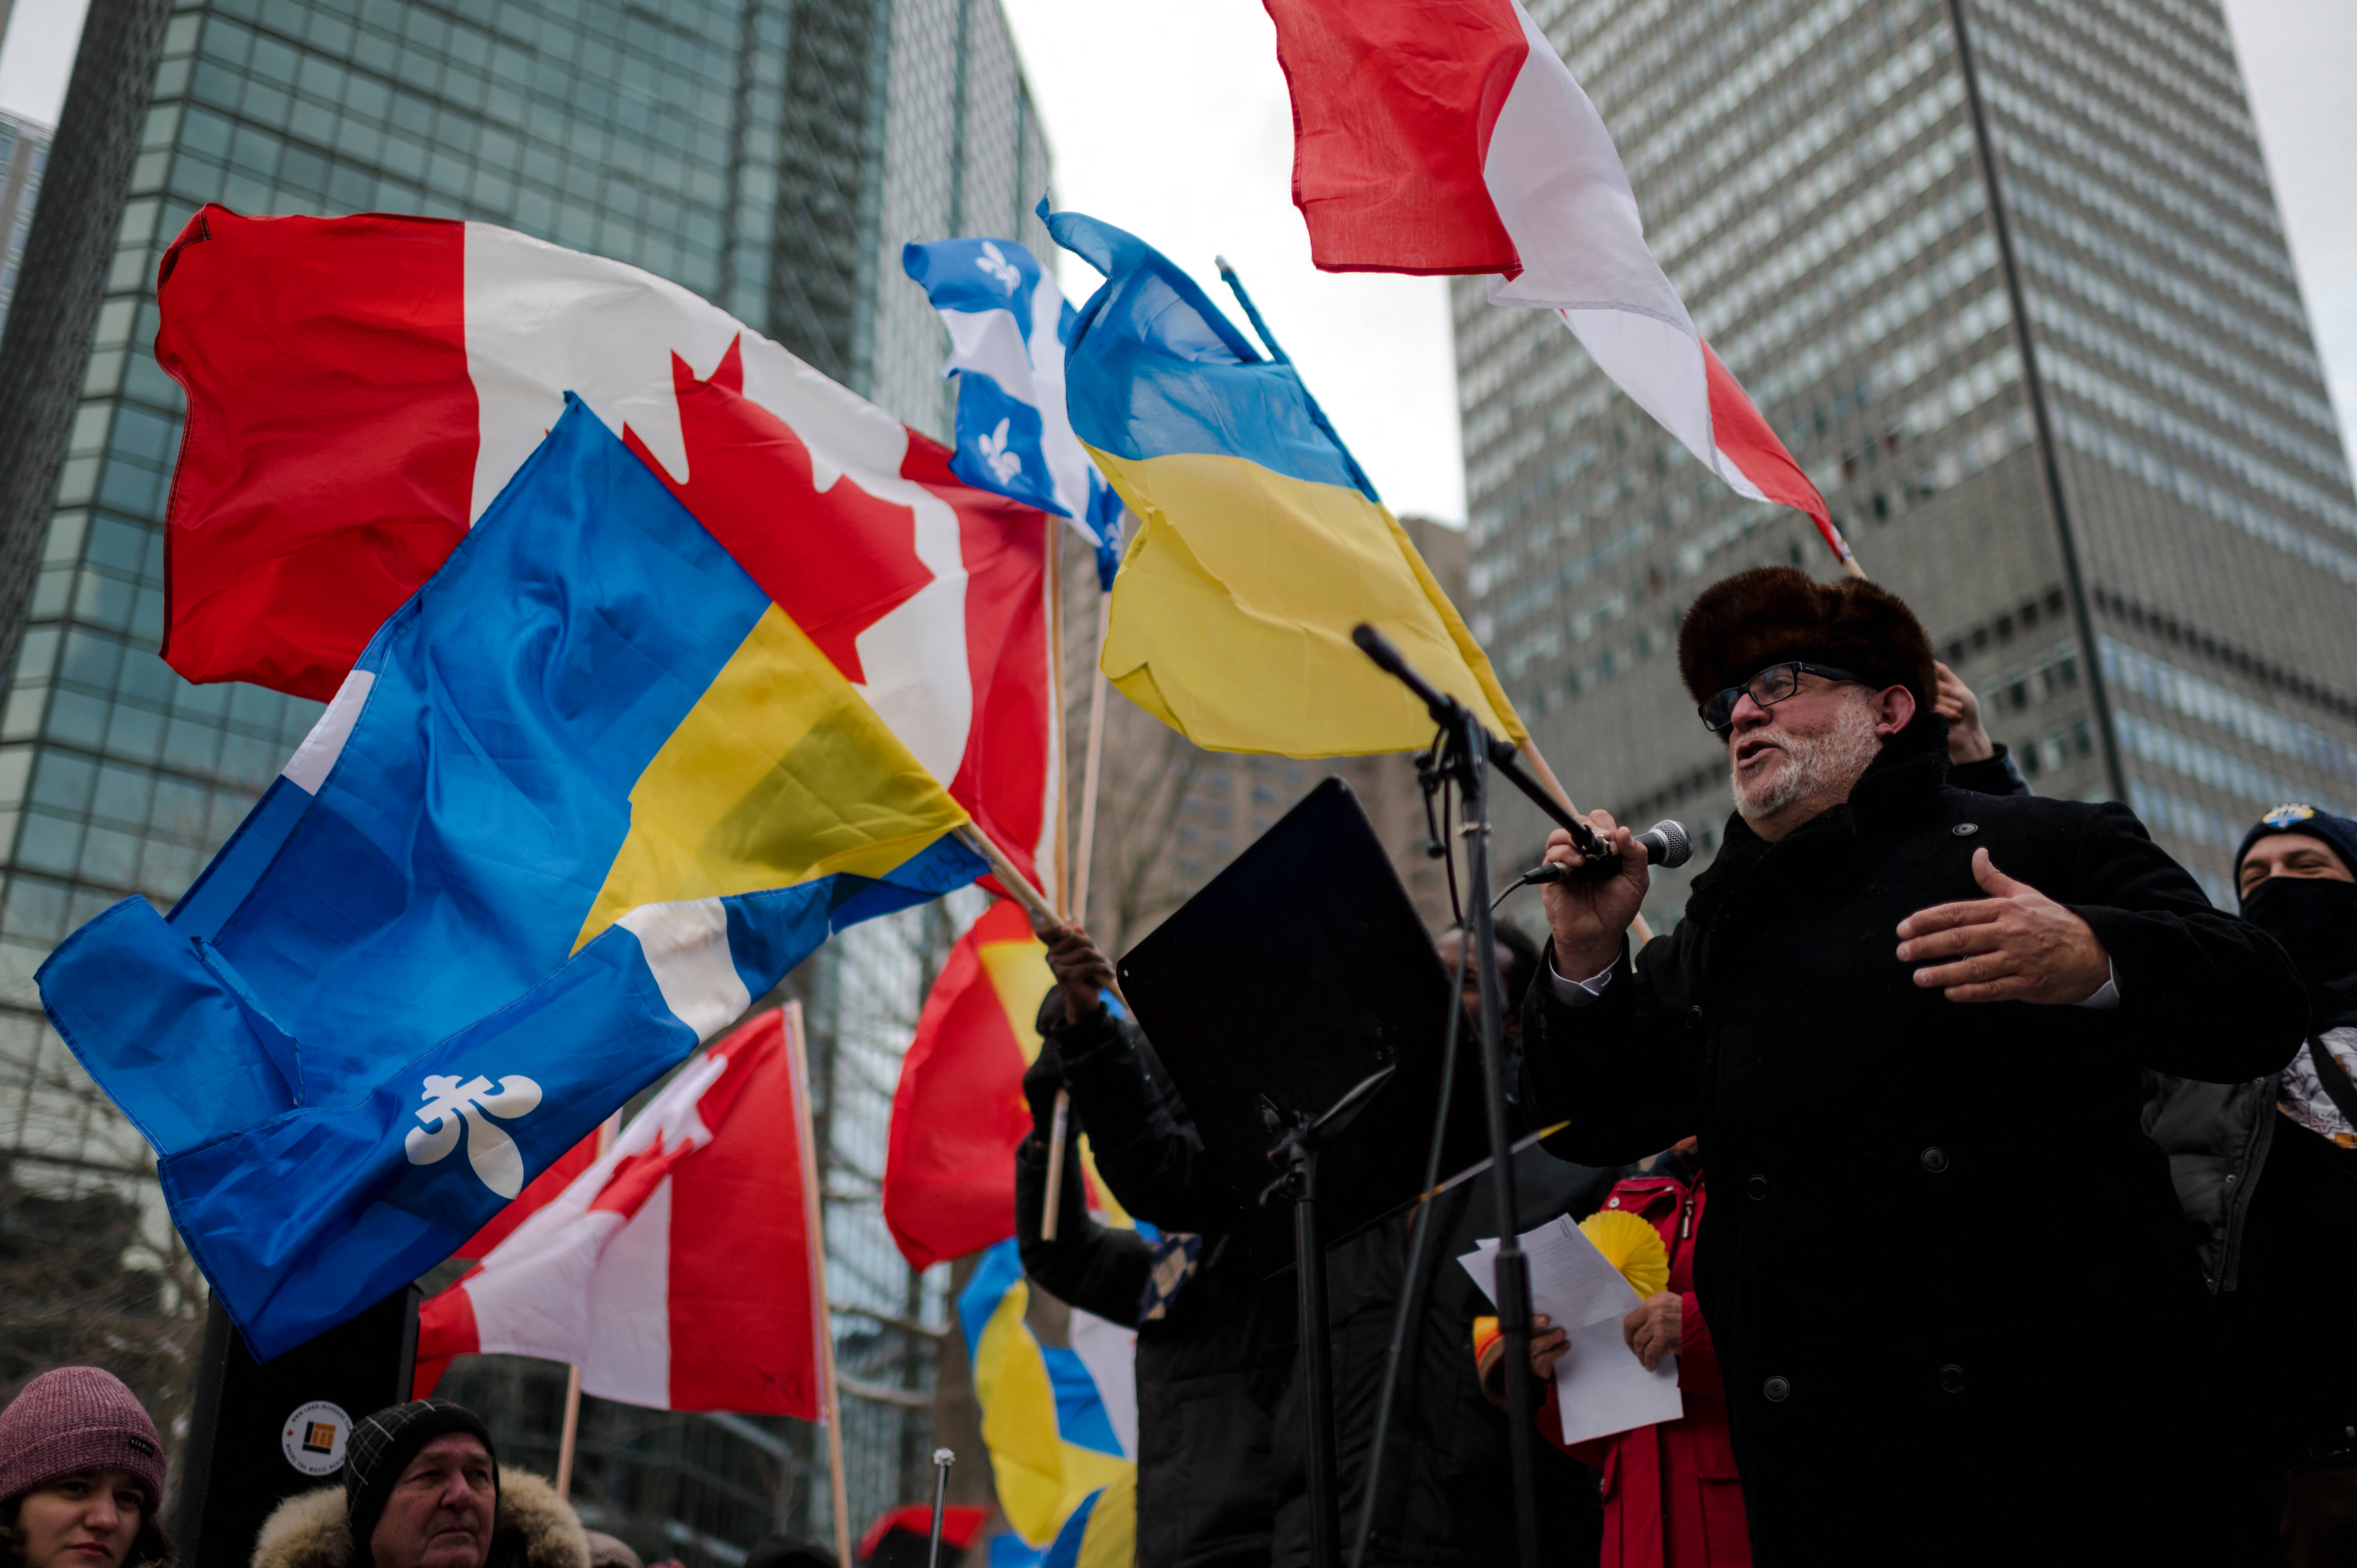 Ukraine conflict: Canada offers support to Ukrainian students